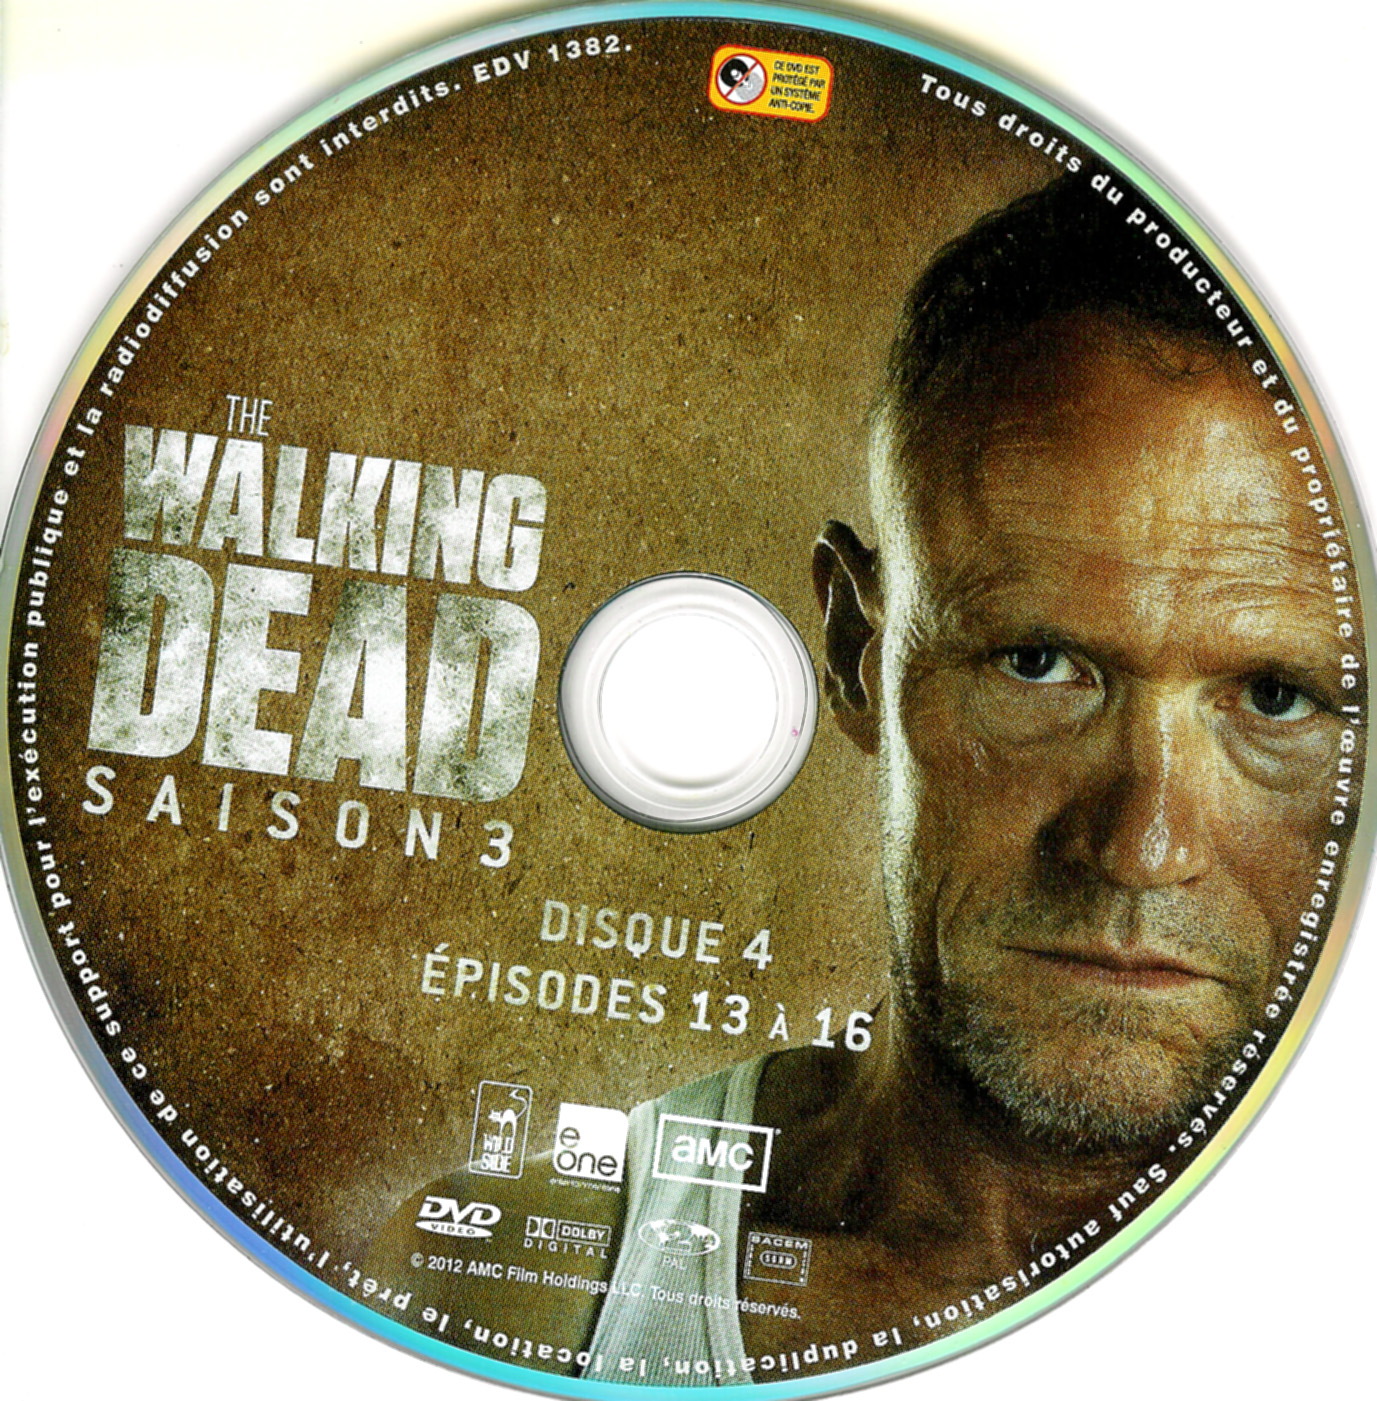 The Walking Dead Saison 3 DISC 4